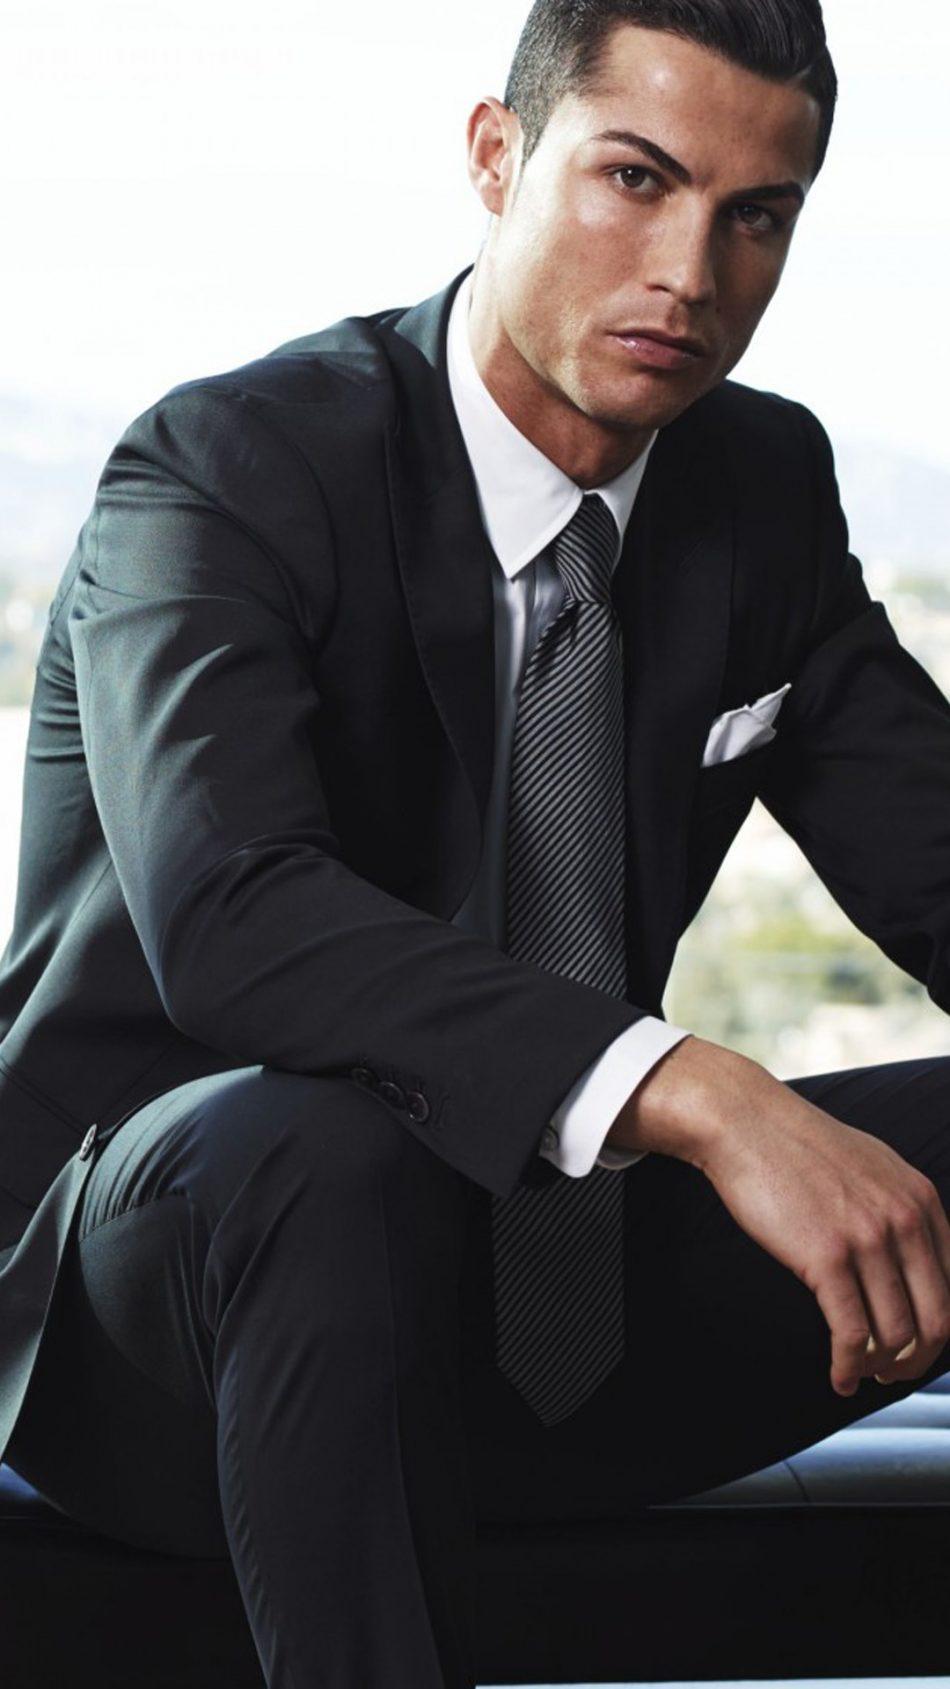 Download Cristiano Ronaldo Suit & Tie Dress Free Pure 4K